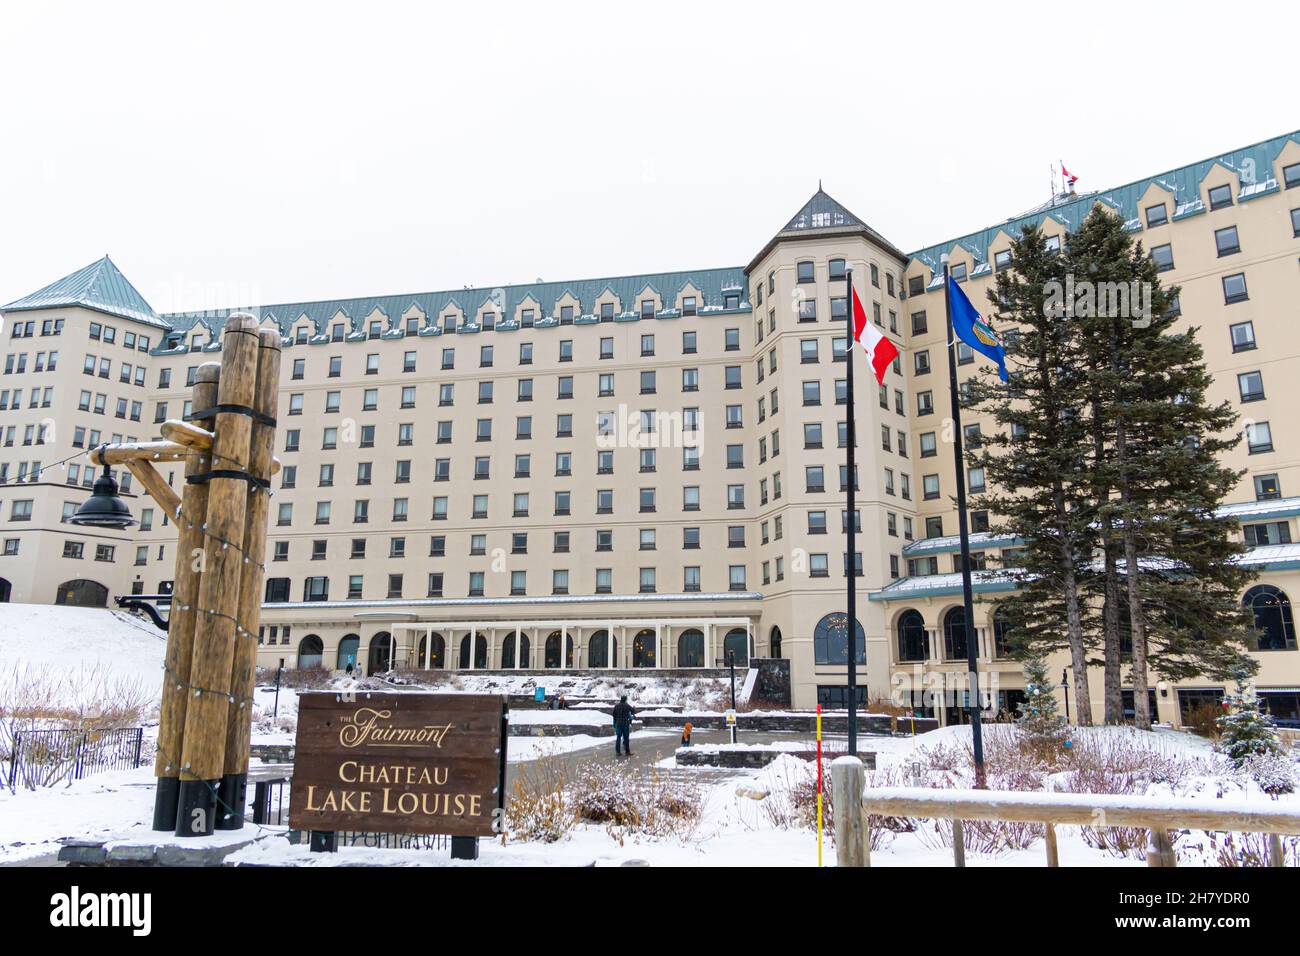 November 6 2021 Lake Louise Alberta Canada - Fairmont Chateau Lake Louise Hotel building Stock Photo